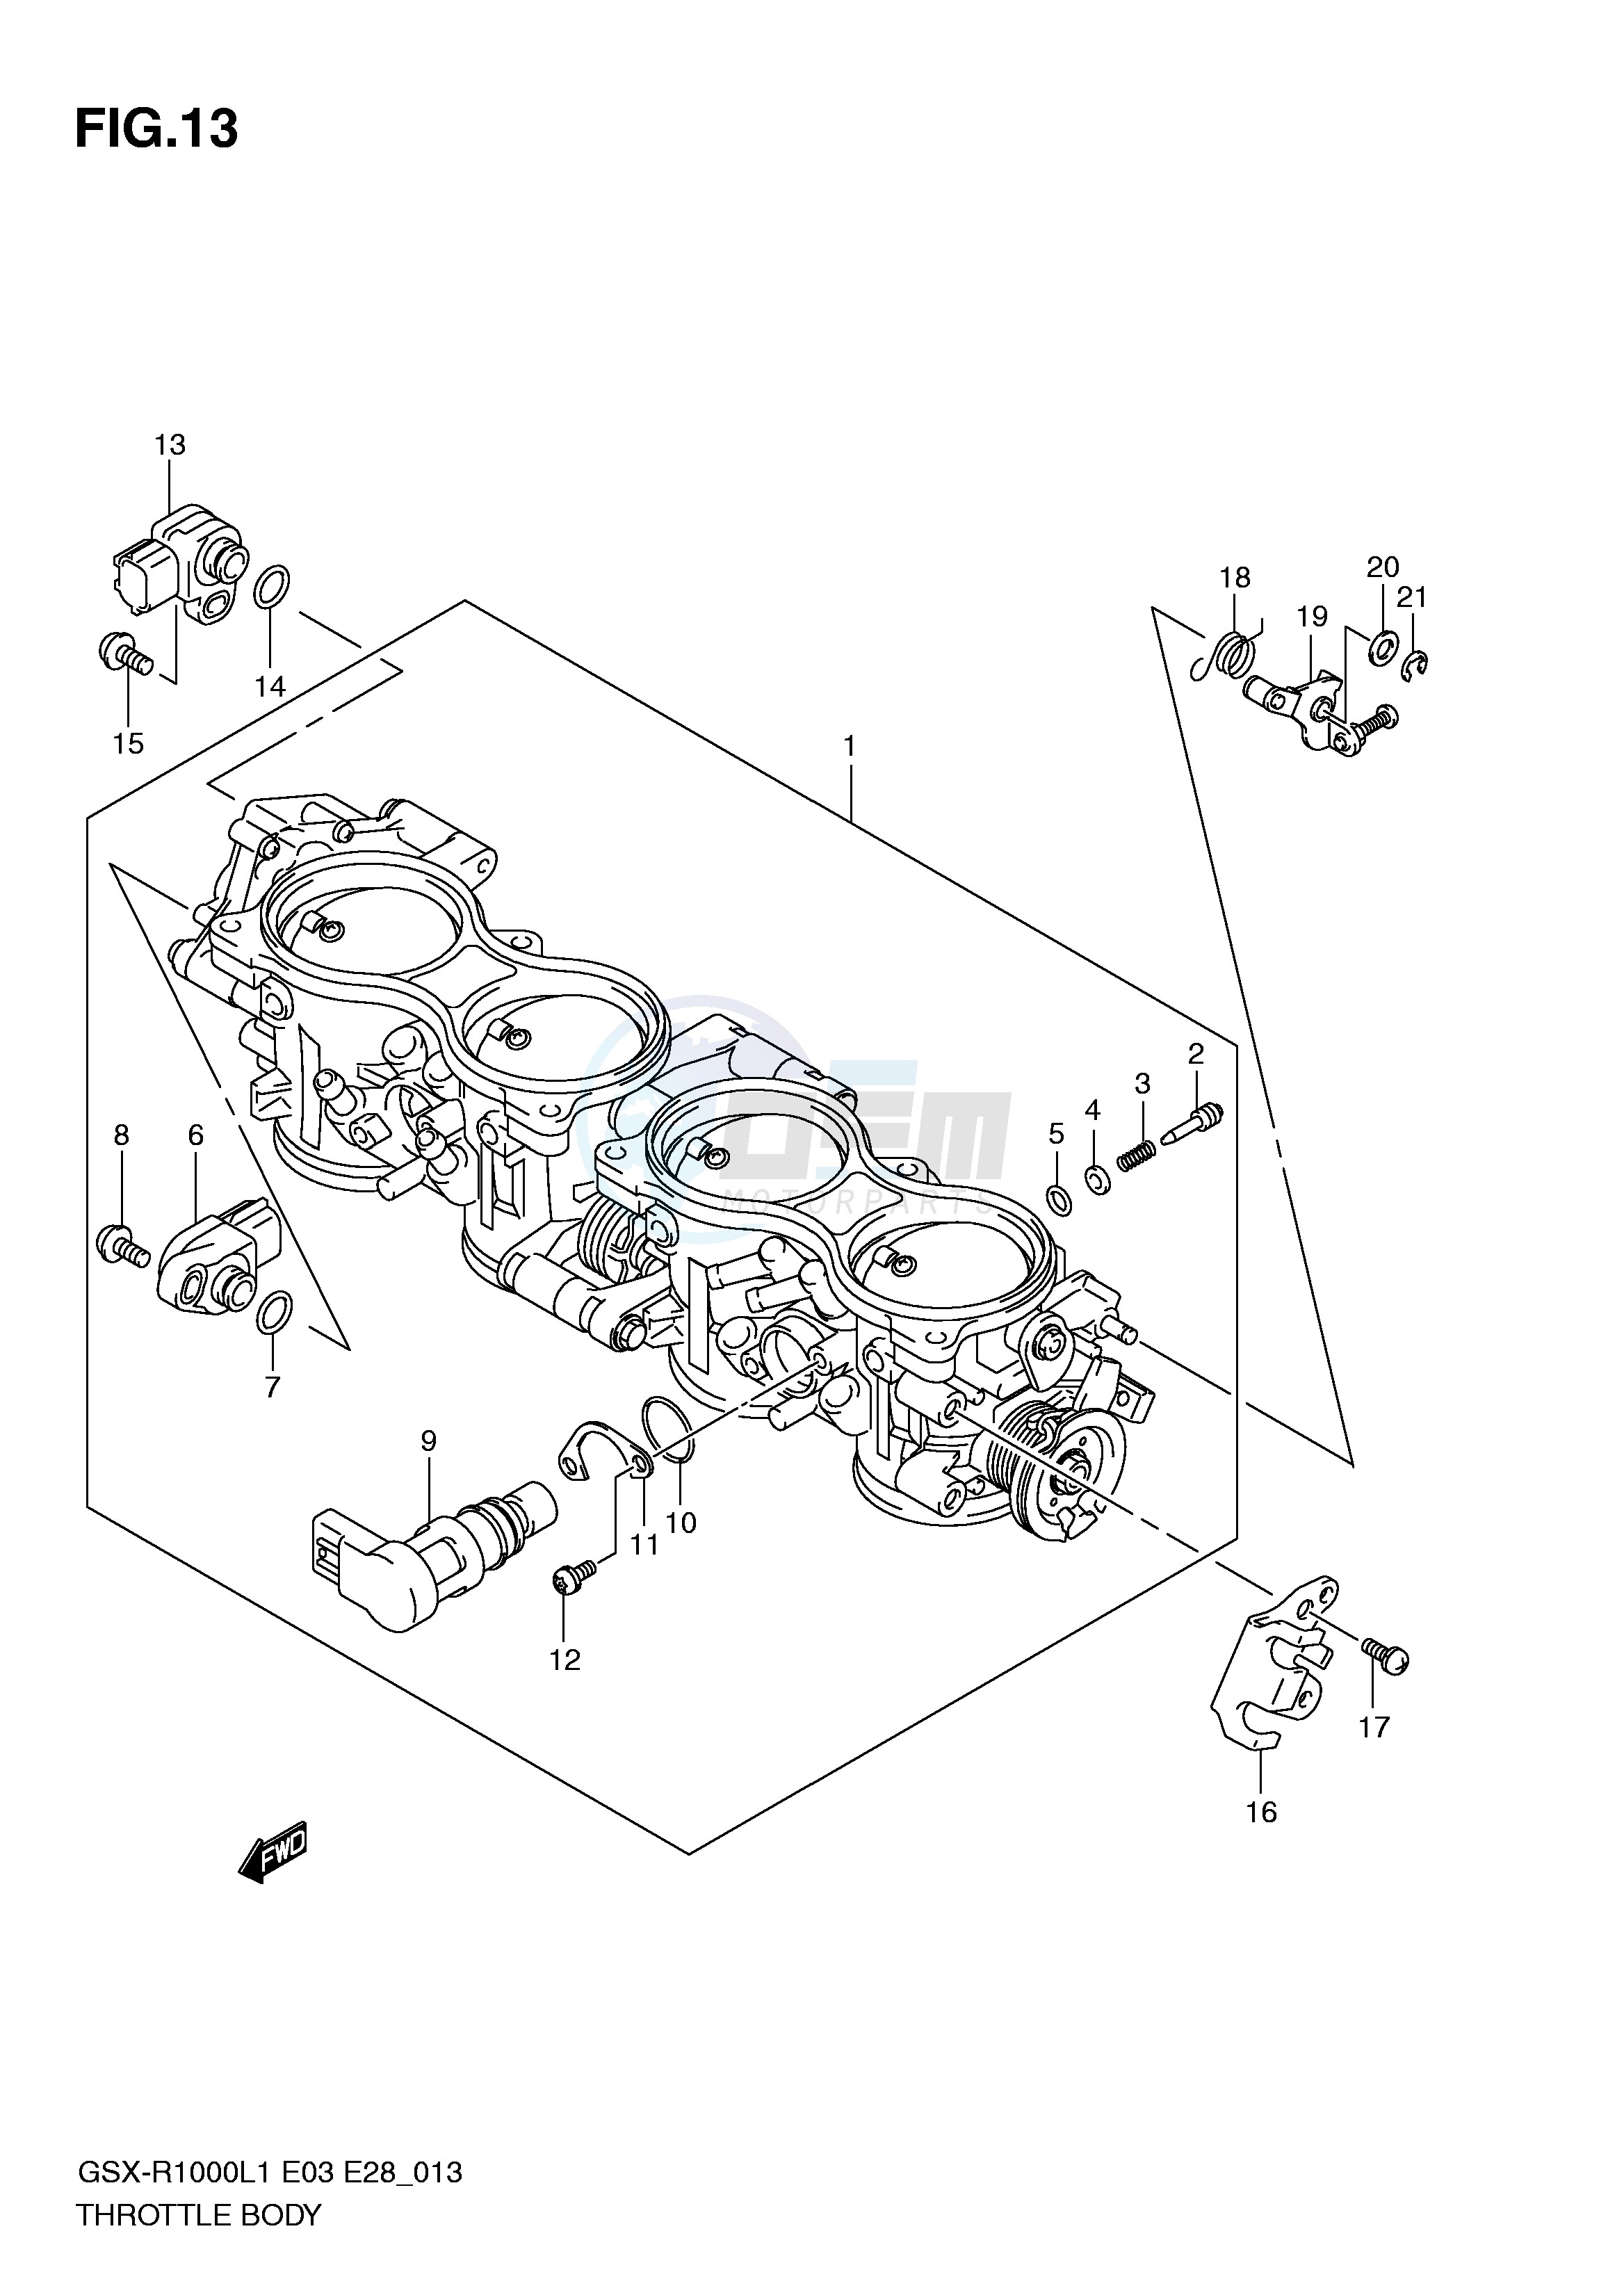 THROTTLE BODY (GSX-R1000L1 E3) blueprint